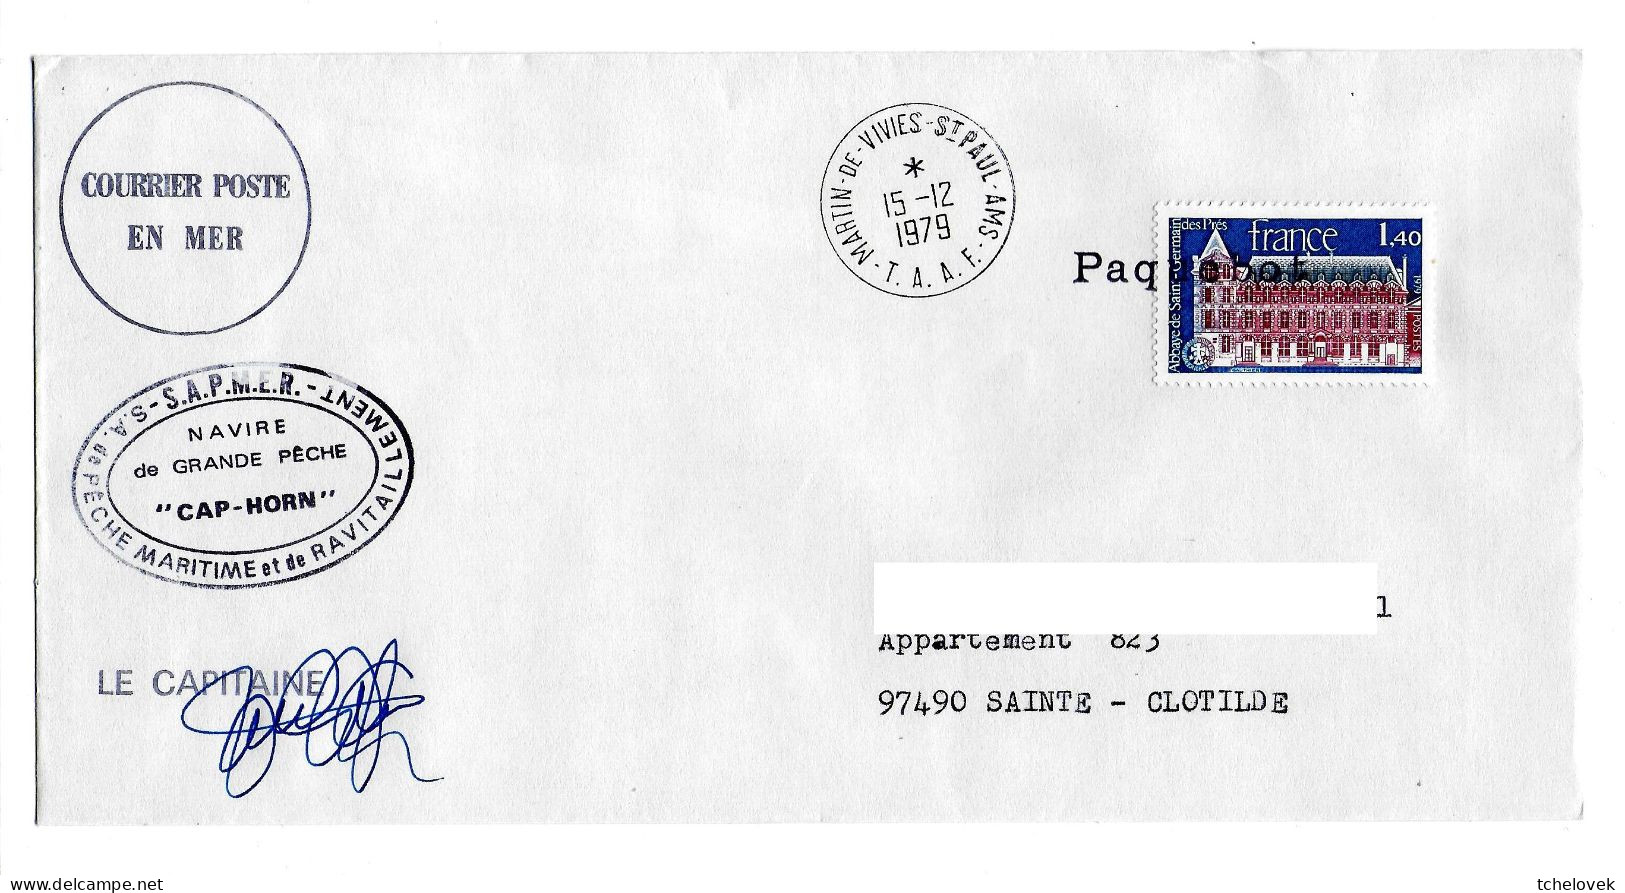 FSAT TAAF Cap Horn Sapmer 15.12.1979 SPA T. France 1.40 St Germain Des Pres (2) - Covers & Documents